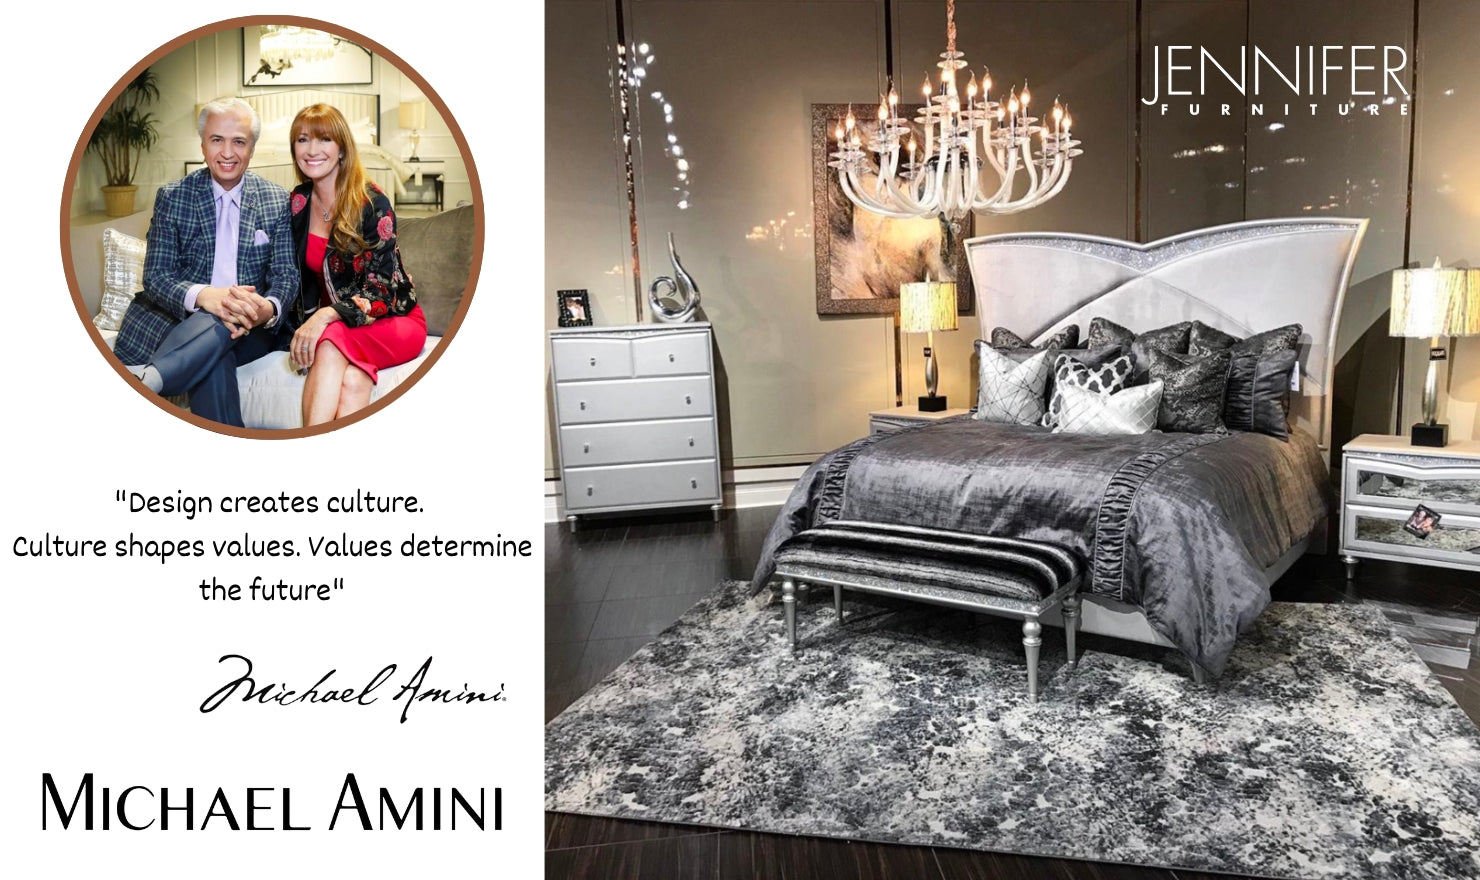 Buy Michael Amini Furniture at Jennifer Furniture